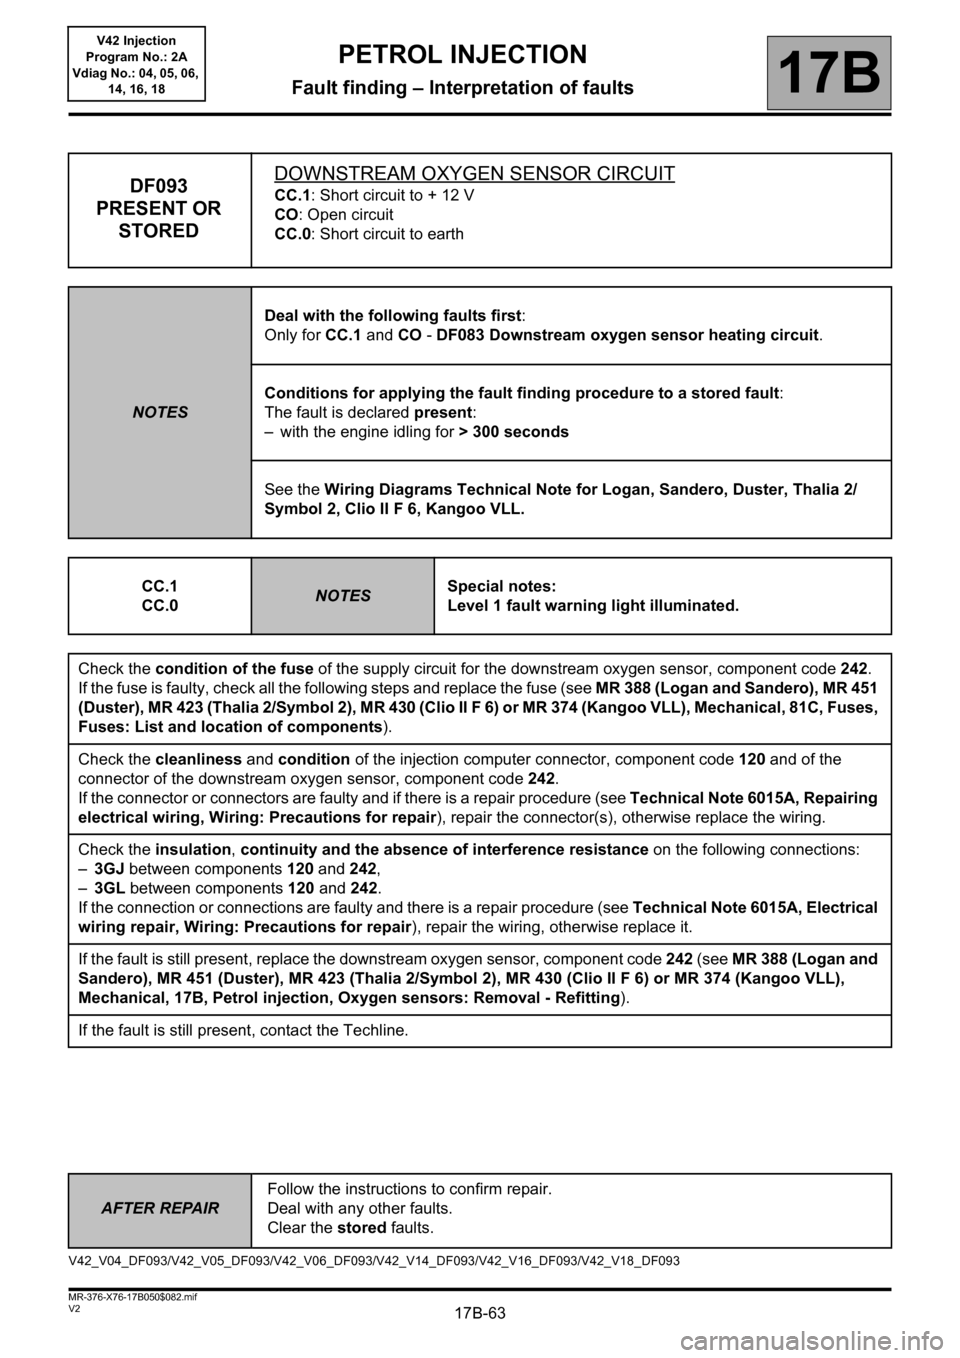 RENAULT KANGOO 2013 X61 / 2.G Petrol V42 Injection Repair Manual 17B-63V2 MR-376-X76-17B050$082.mif
PETROL INJECTION
Fault finding – Interpretation of faults17B
V42 Injection
Program No.: 2A
Vdiag No.: 04, 05, 06, 
14, 16, 18
AFTER REPAIRFollow the instructions t